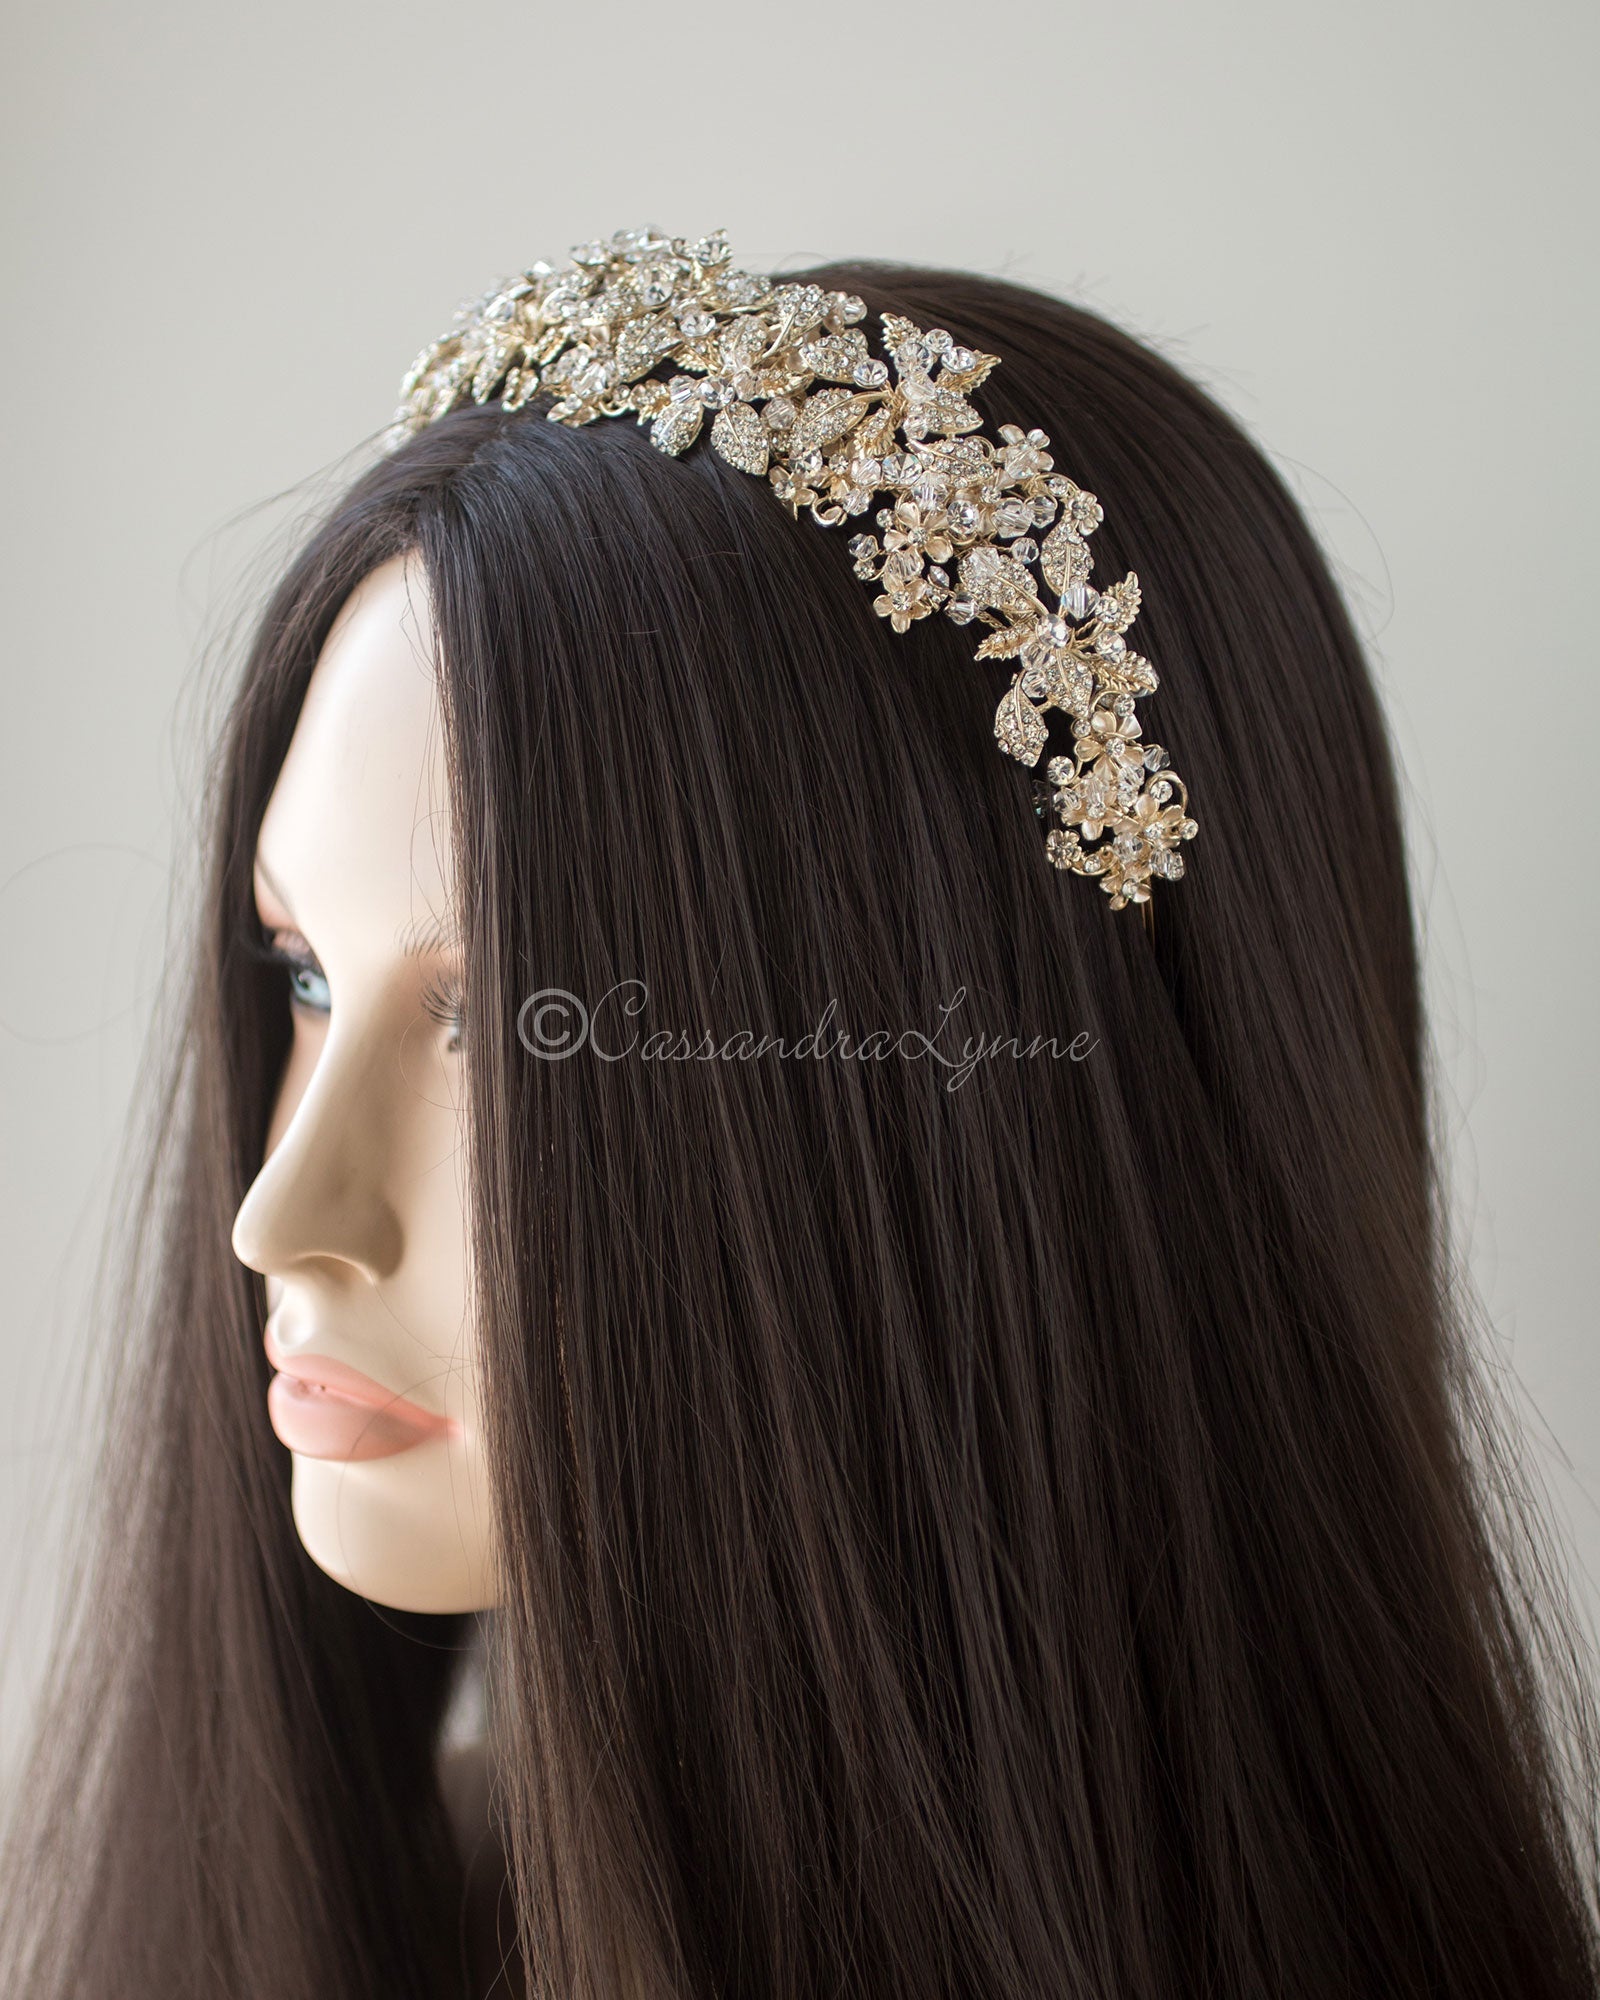 Intricate Wedding Headband with Crystal Beads - Cassandra Lynne